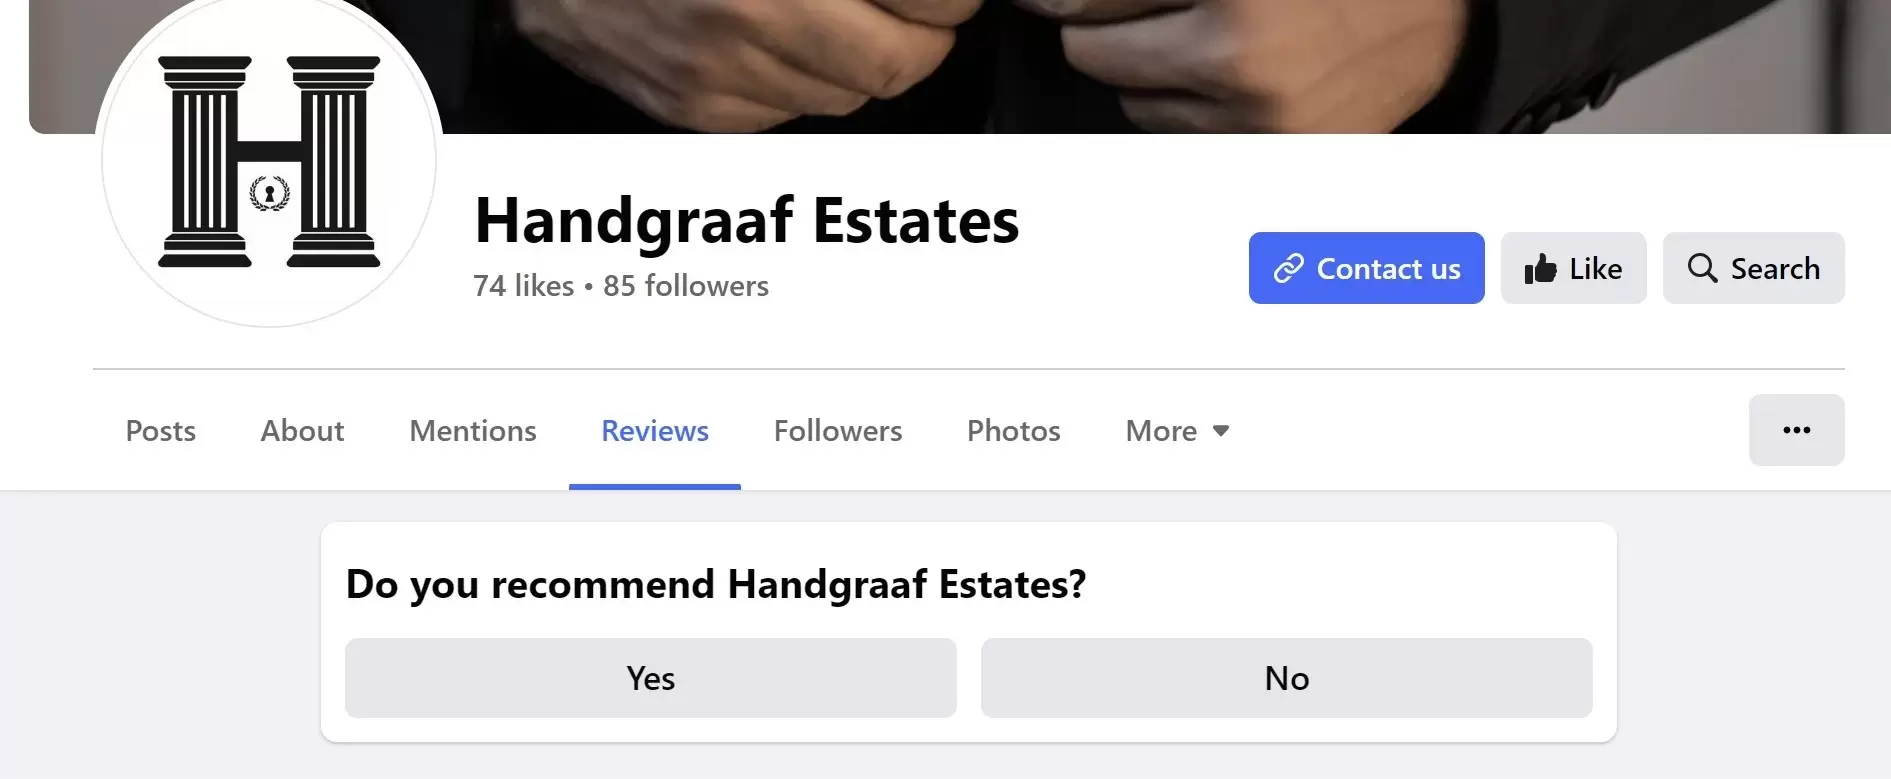 Handgraaf Estates on Facebook